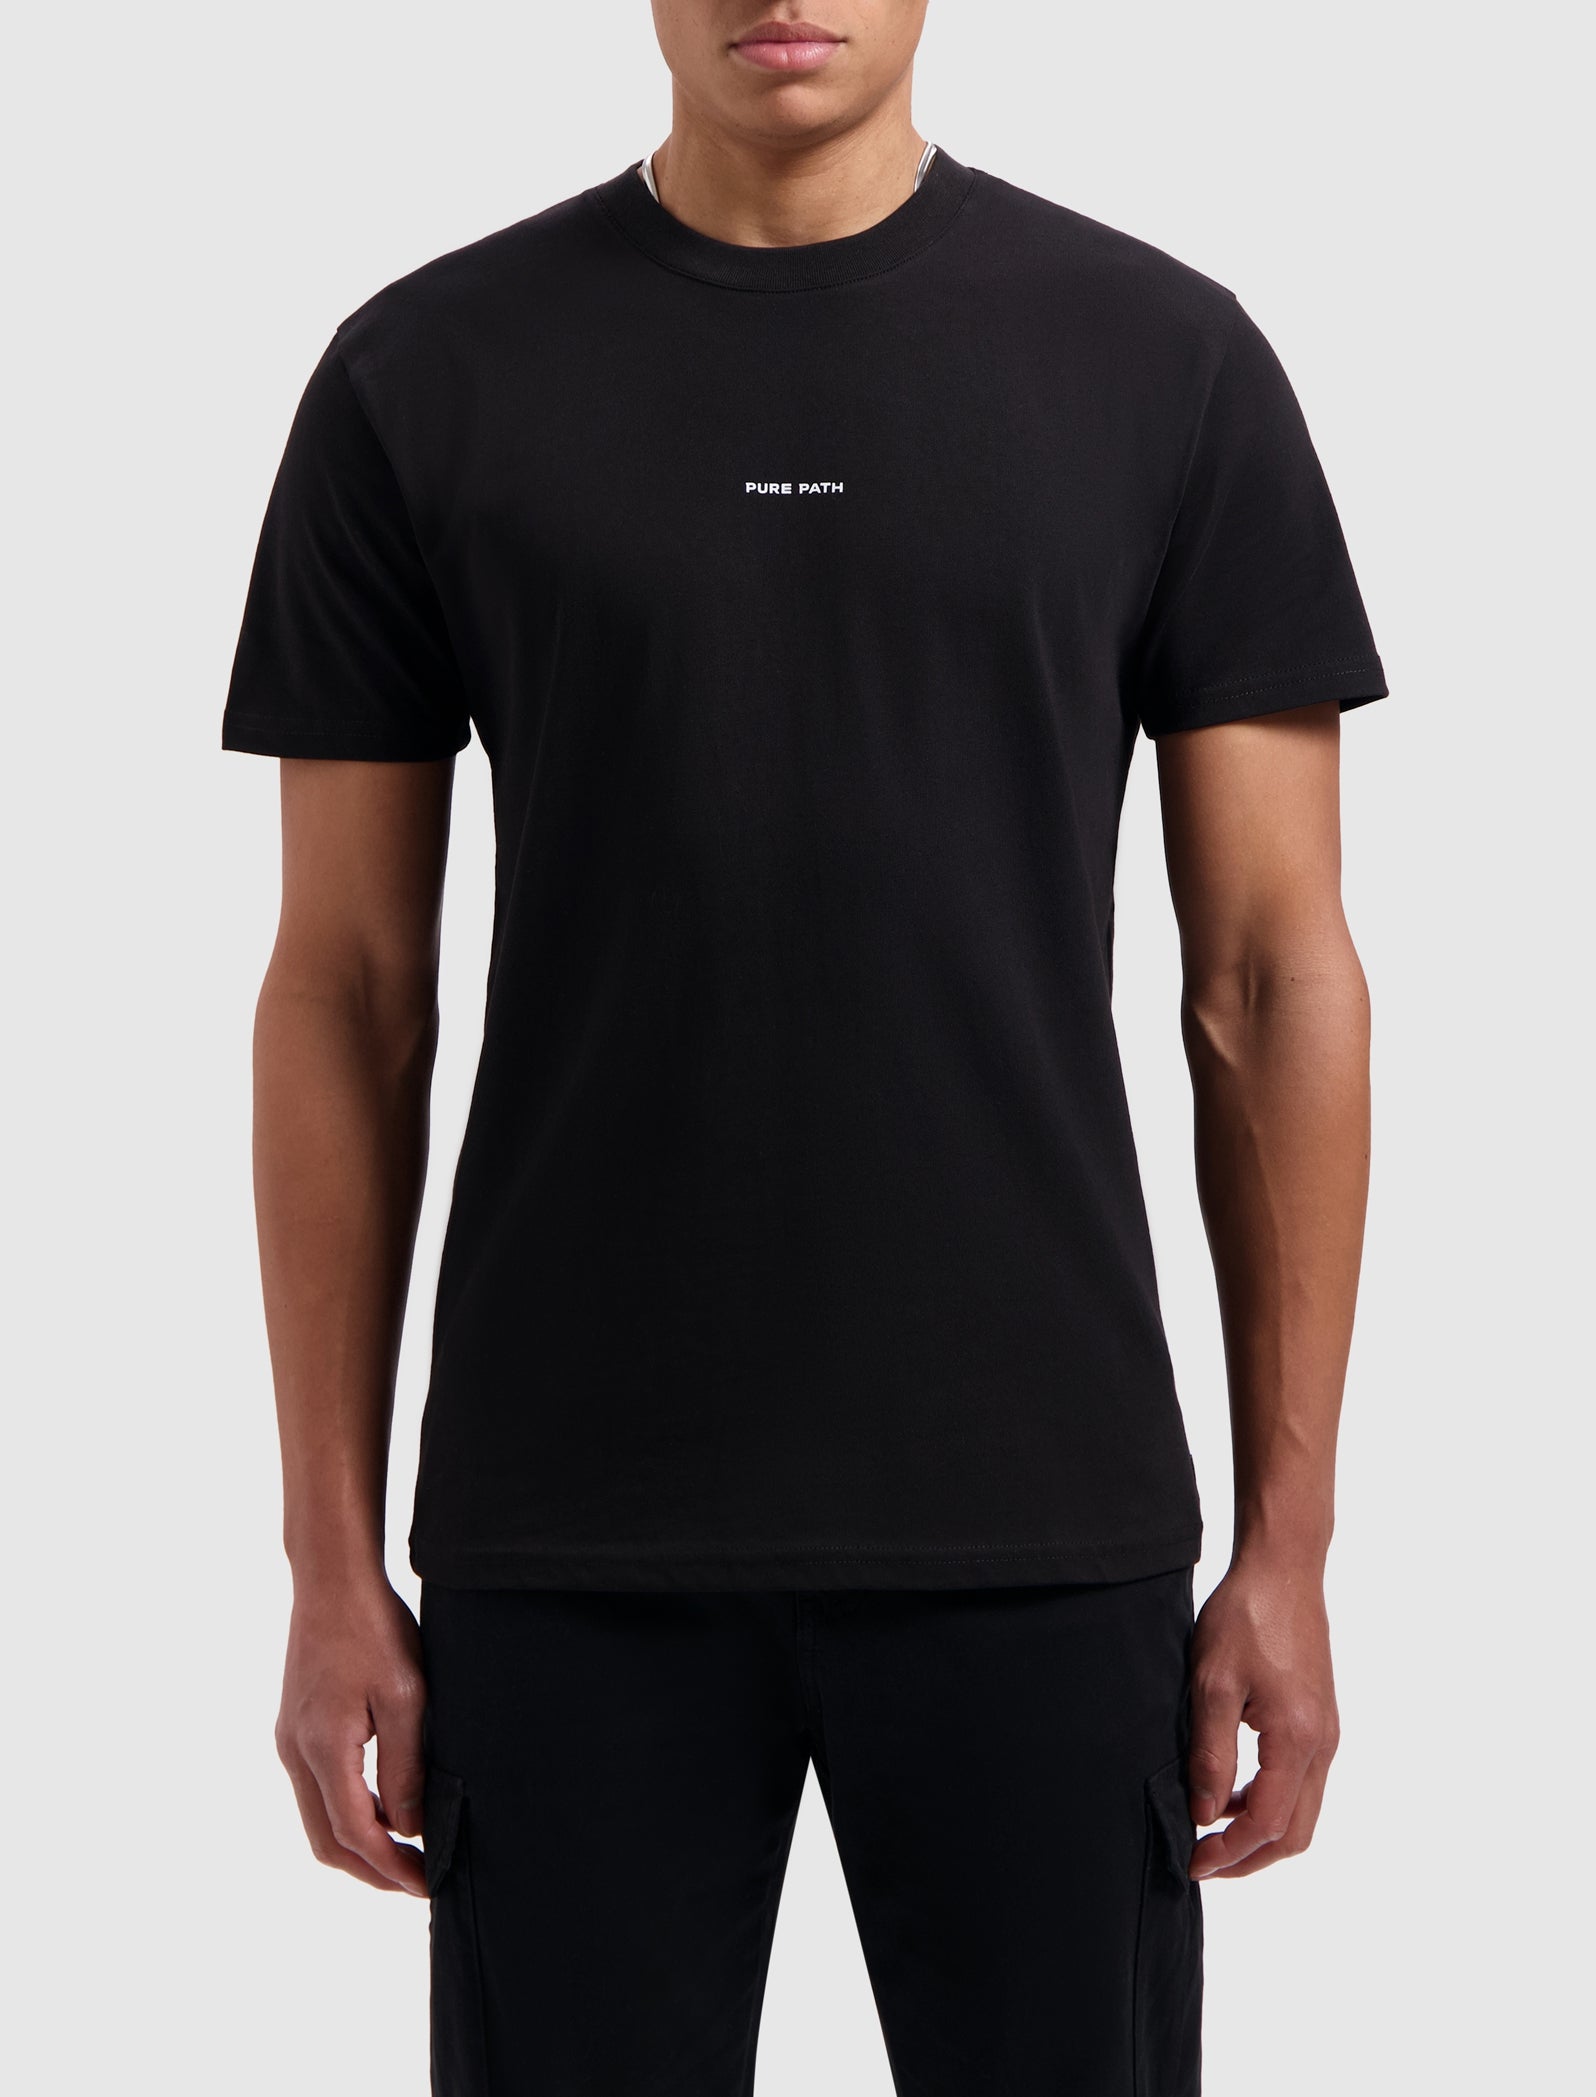 Mirage Print T-shirt | Black